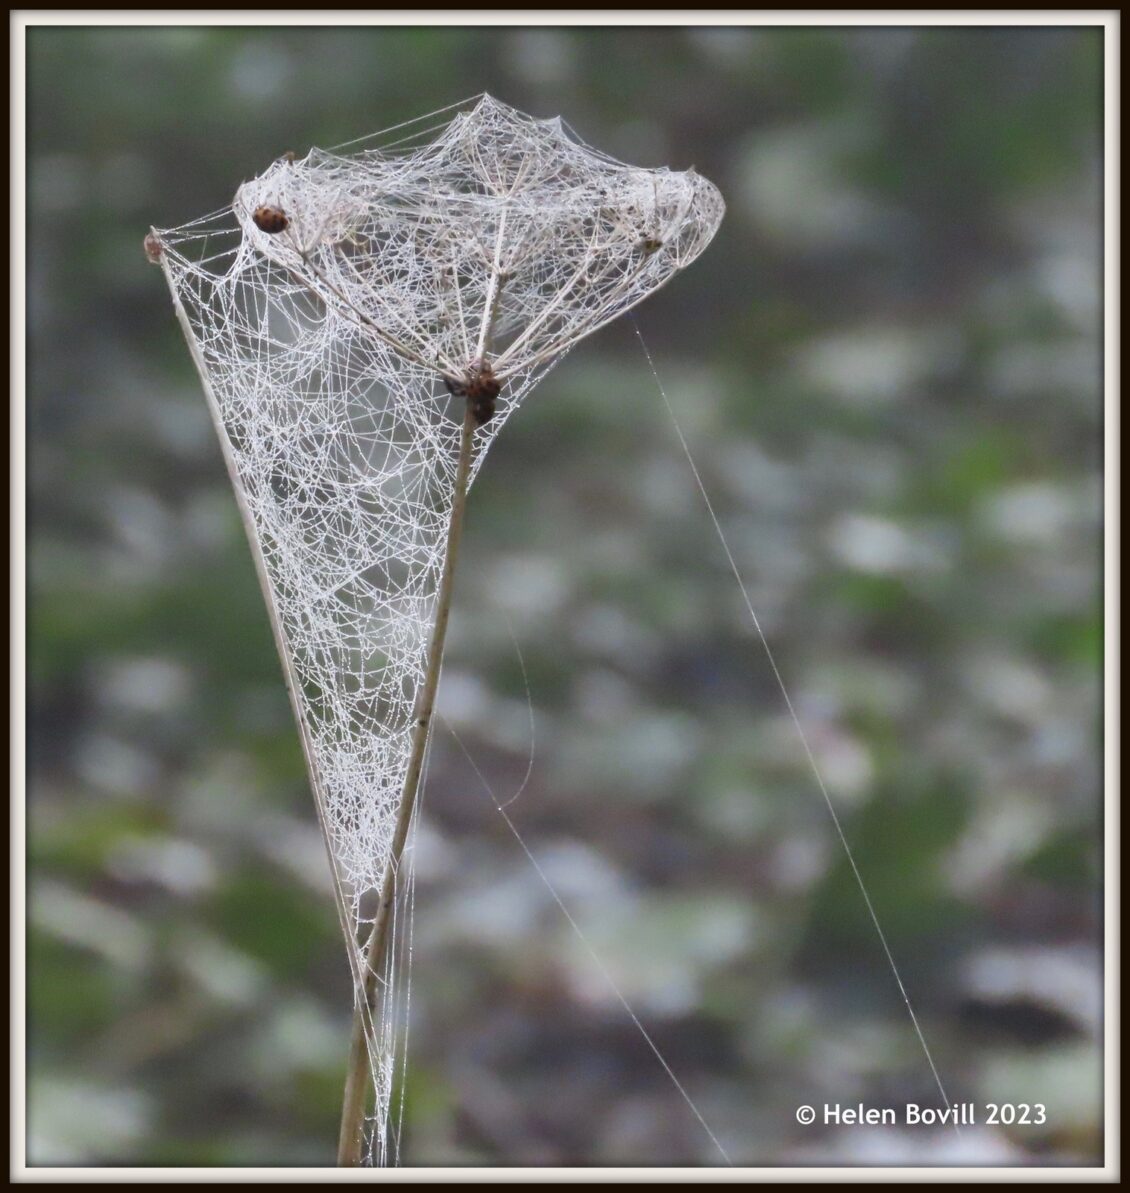 Cobwebs and dew on a Hogweed seed head